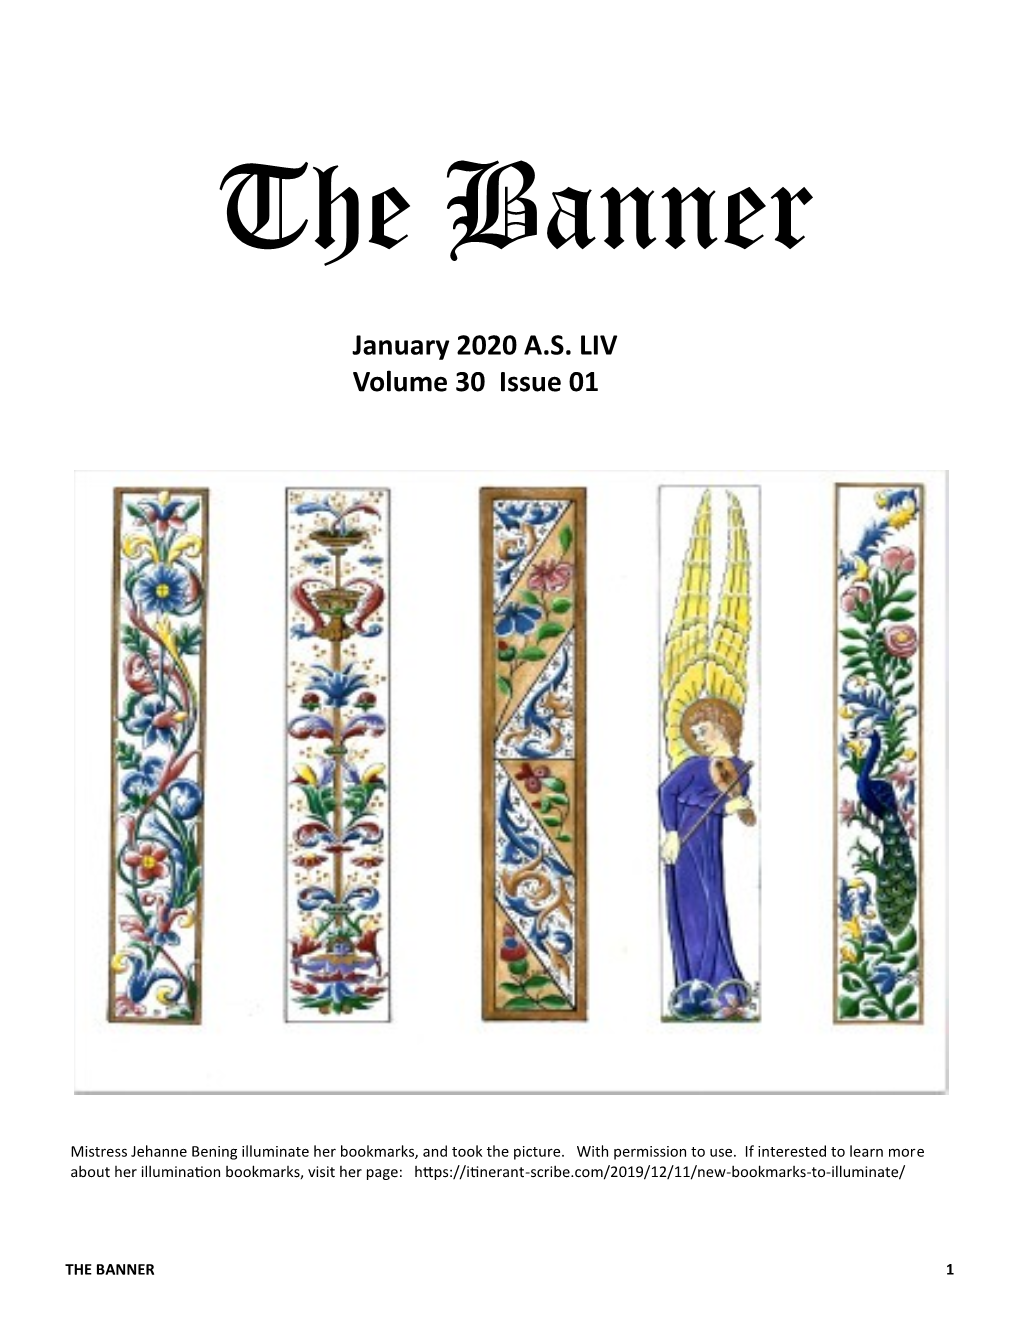 January Banner 2020